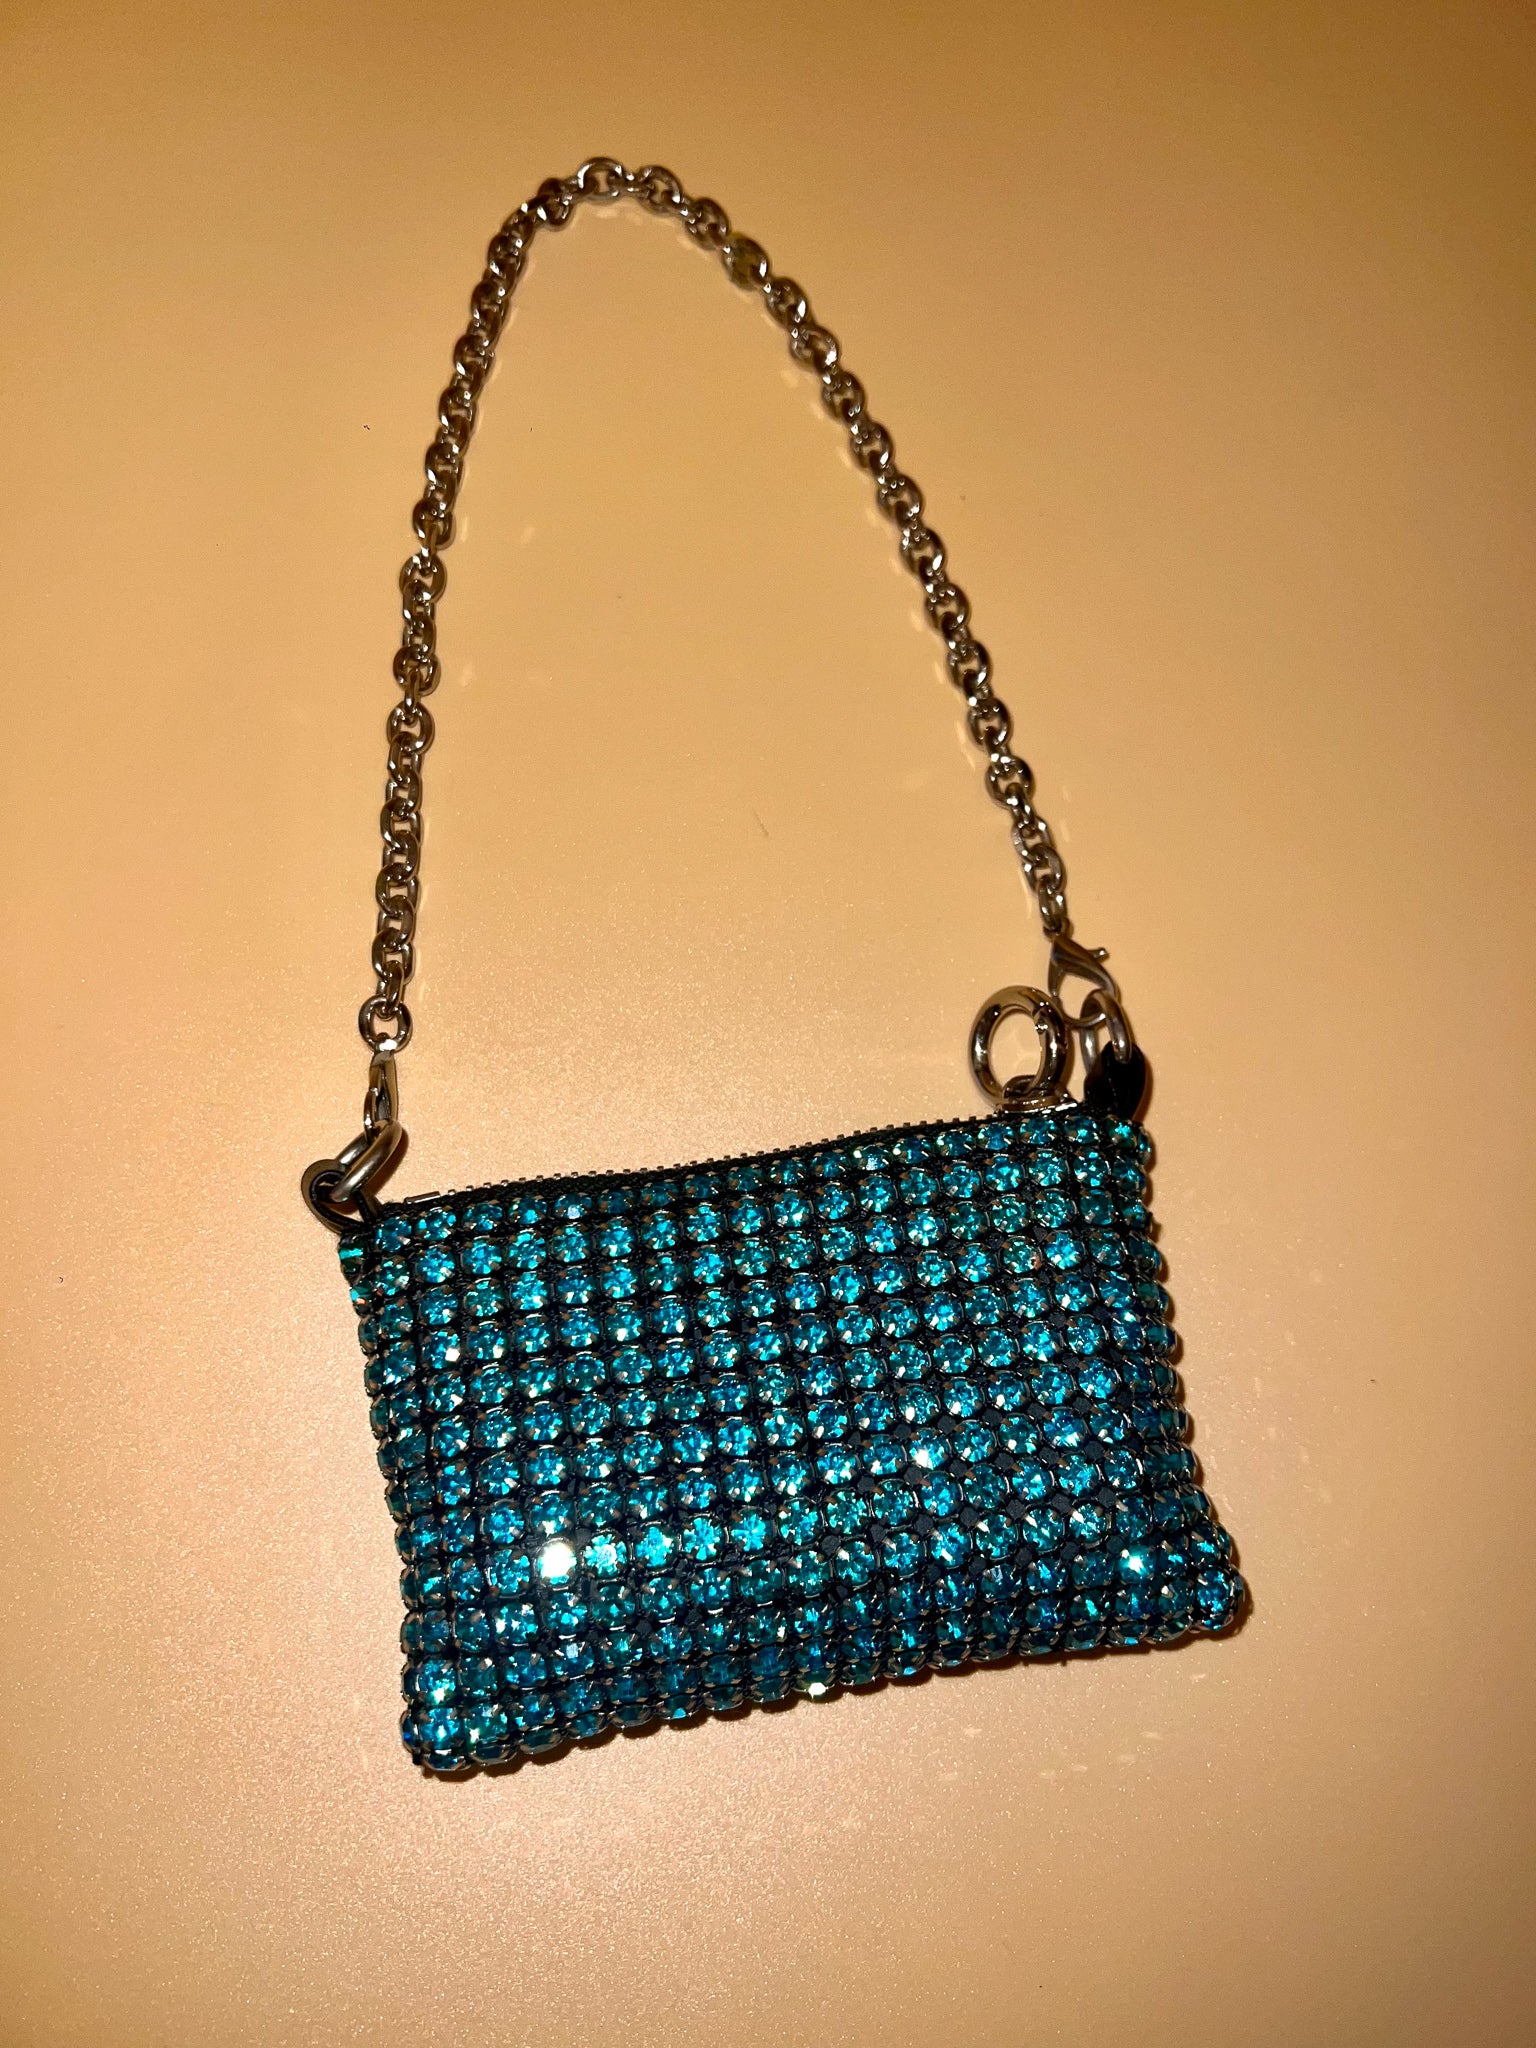 100 Purple Custom Jewelry Pouch With Logo Small Drawstring Bag (Satin  Fabric)